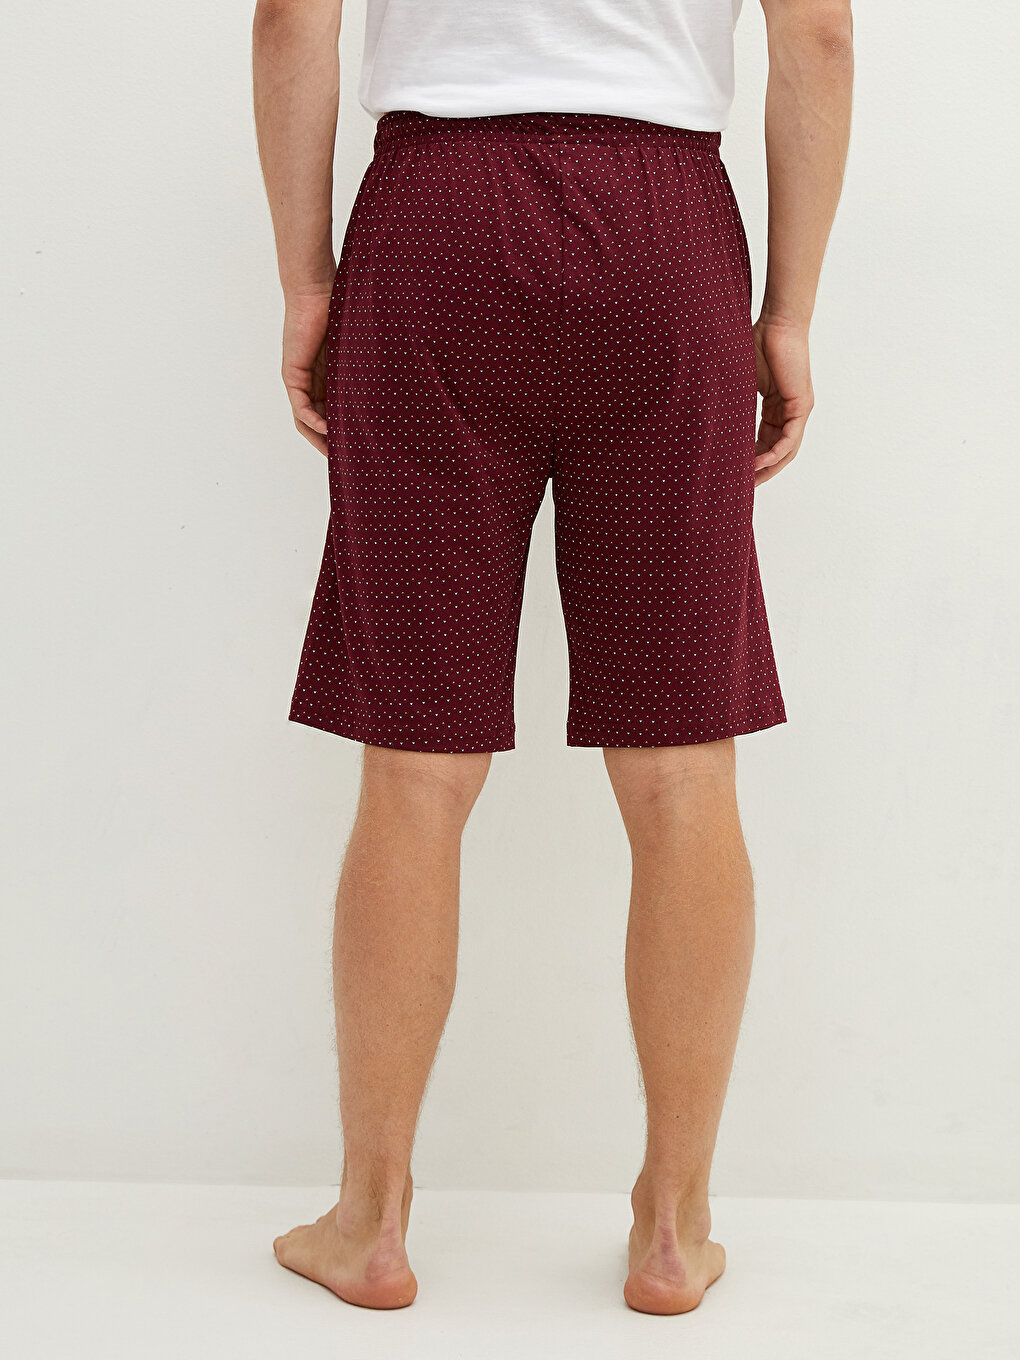 Men's Pajama Bottom Shorts